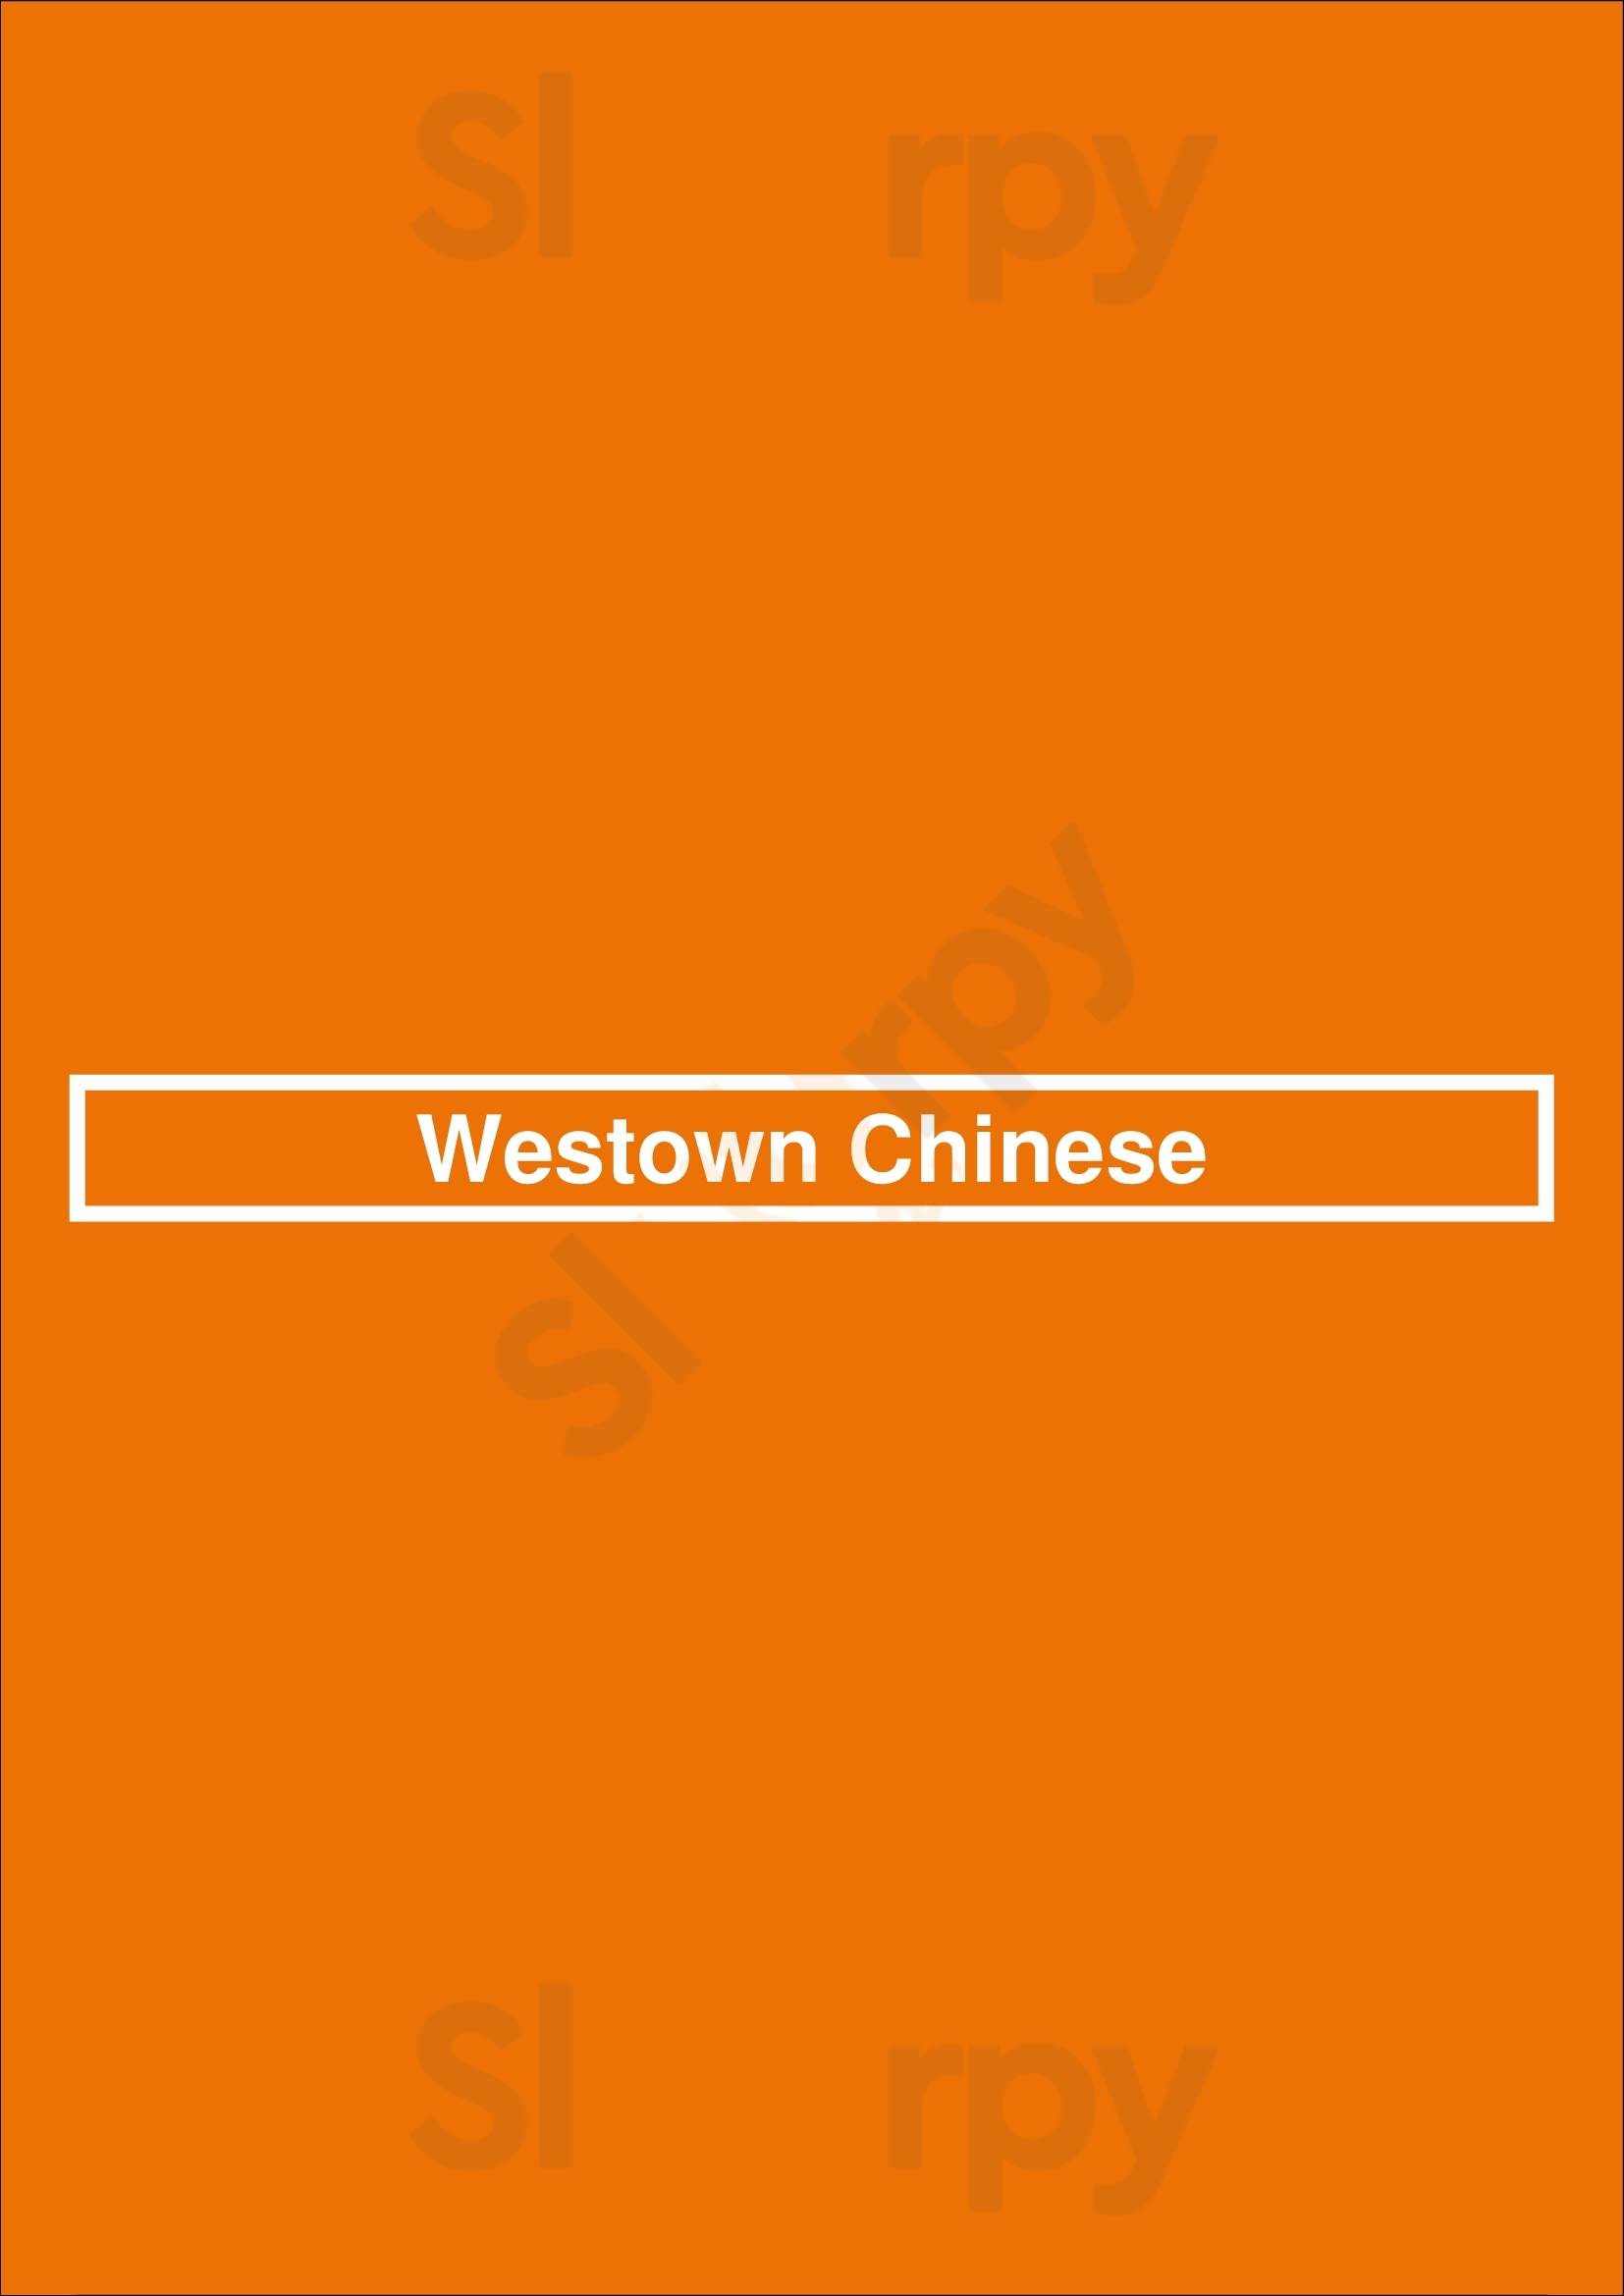 Westown Chinese Toronto Menu - 1